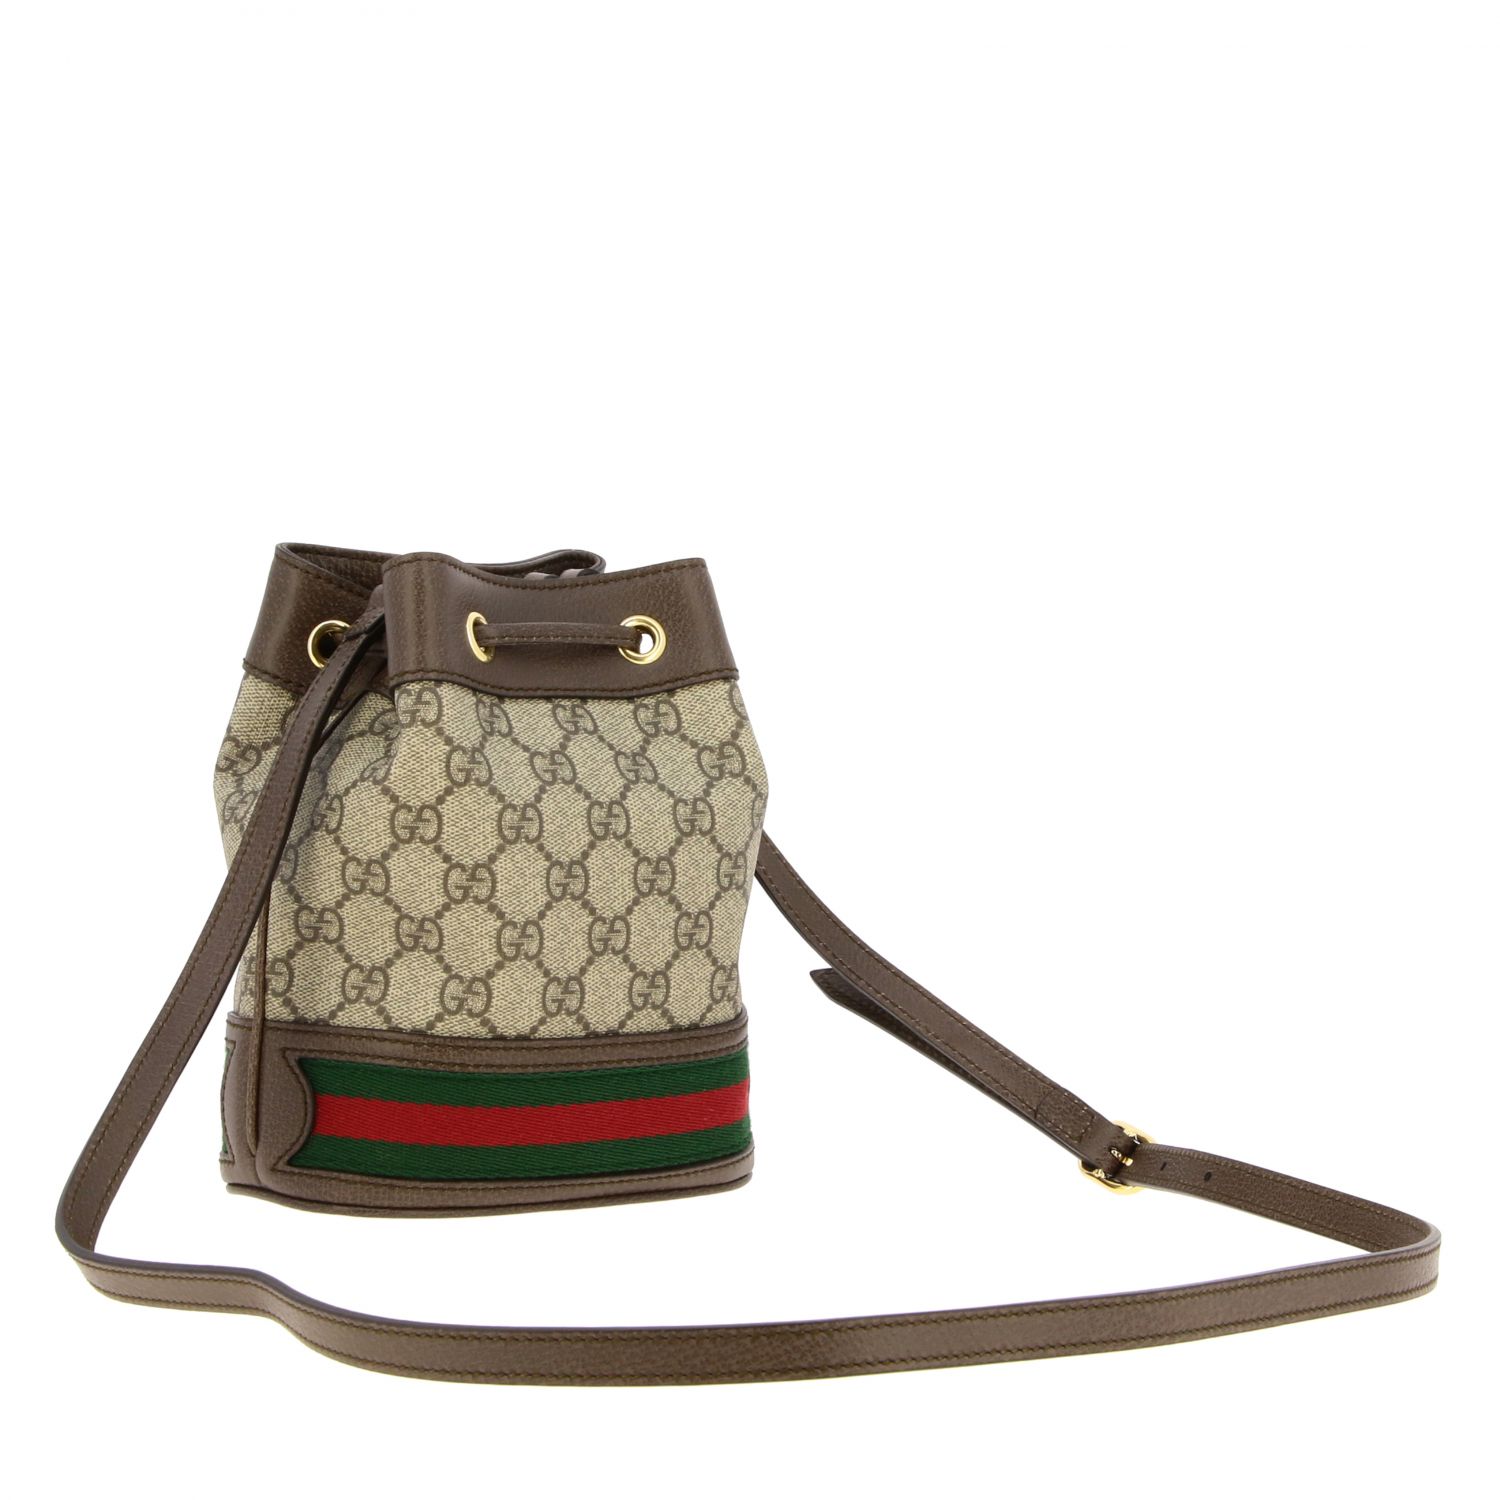 GUCCI: Ophidia bucket bag in GG Supreme leather - Beige | Gucci mini ...